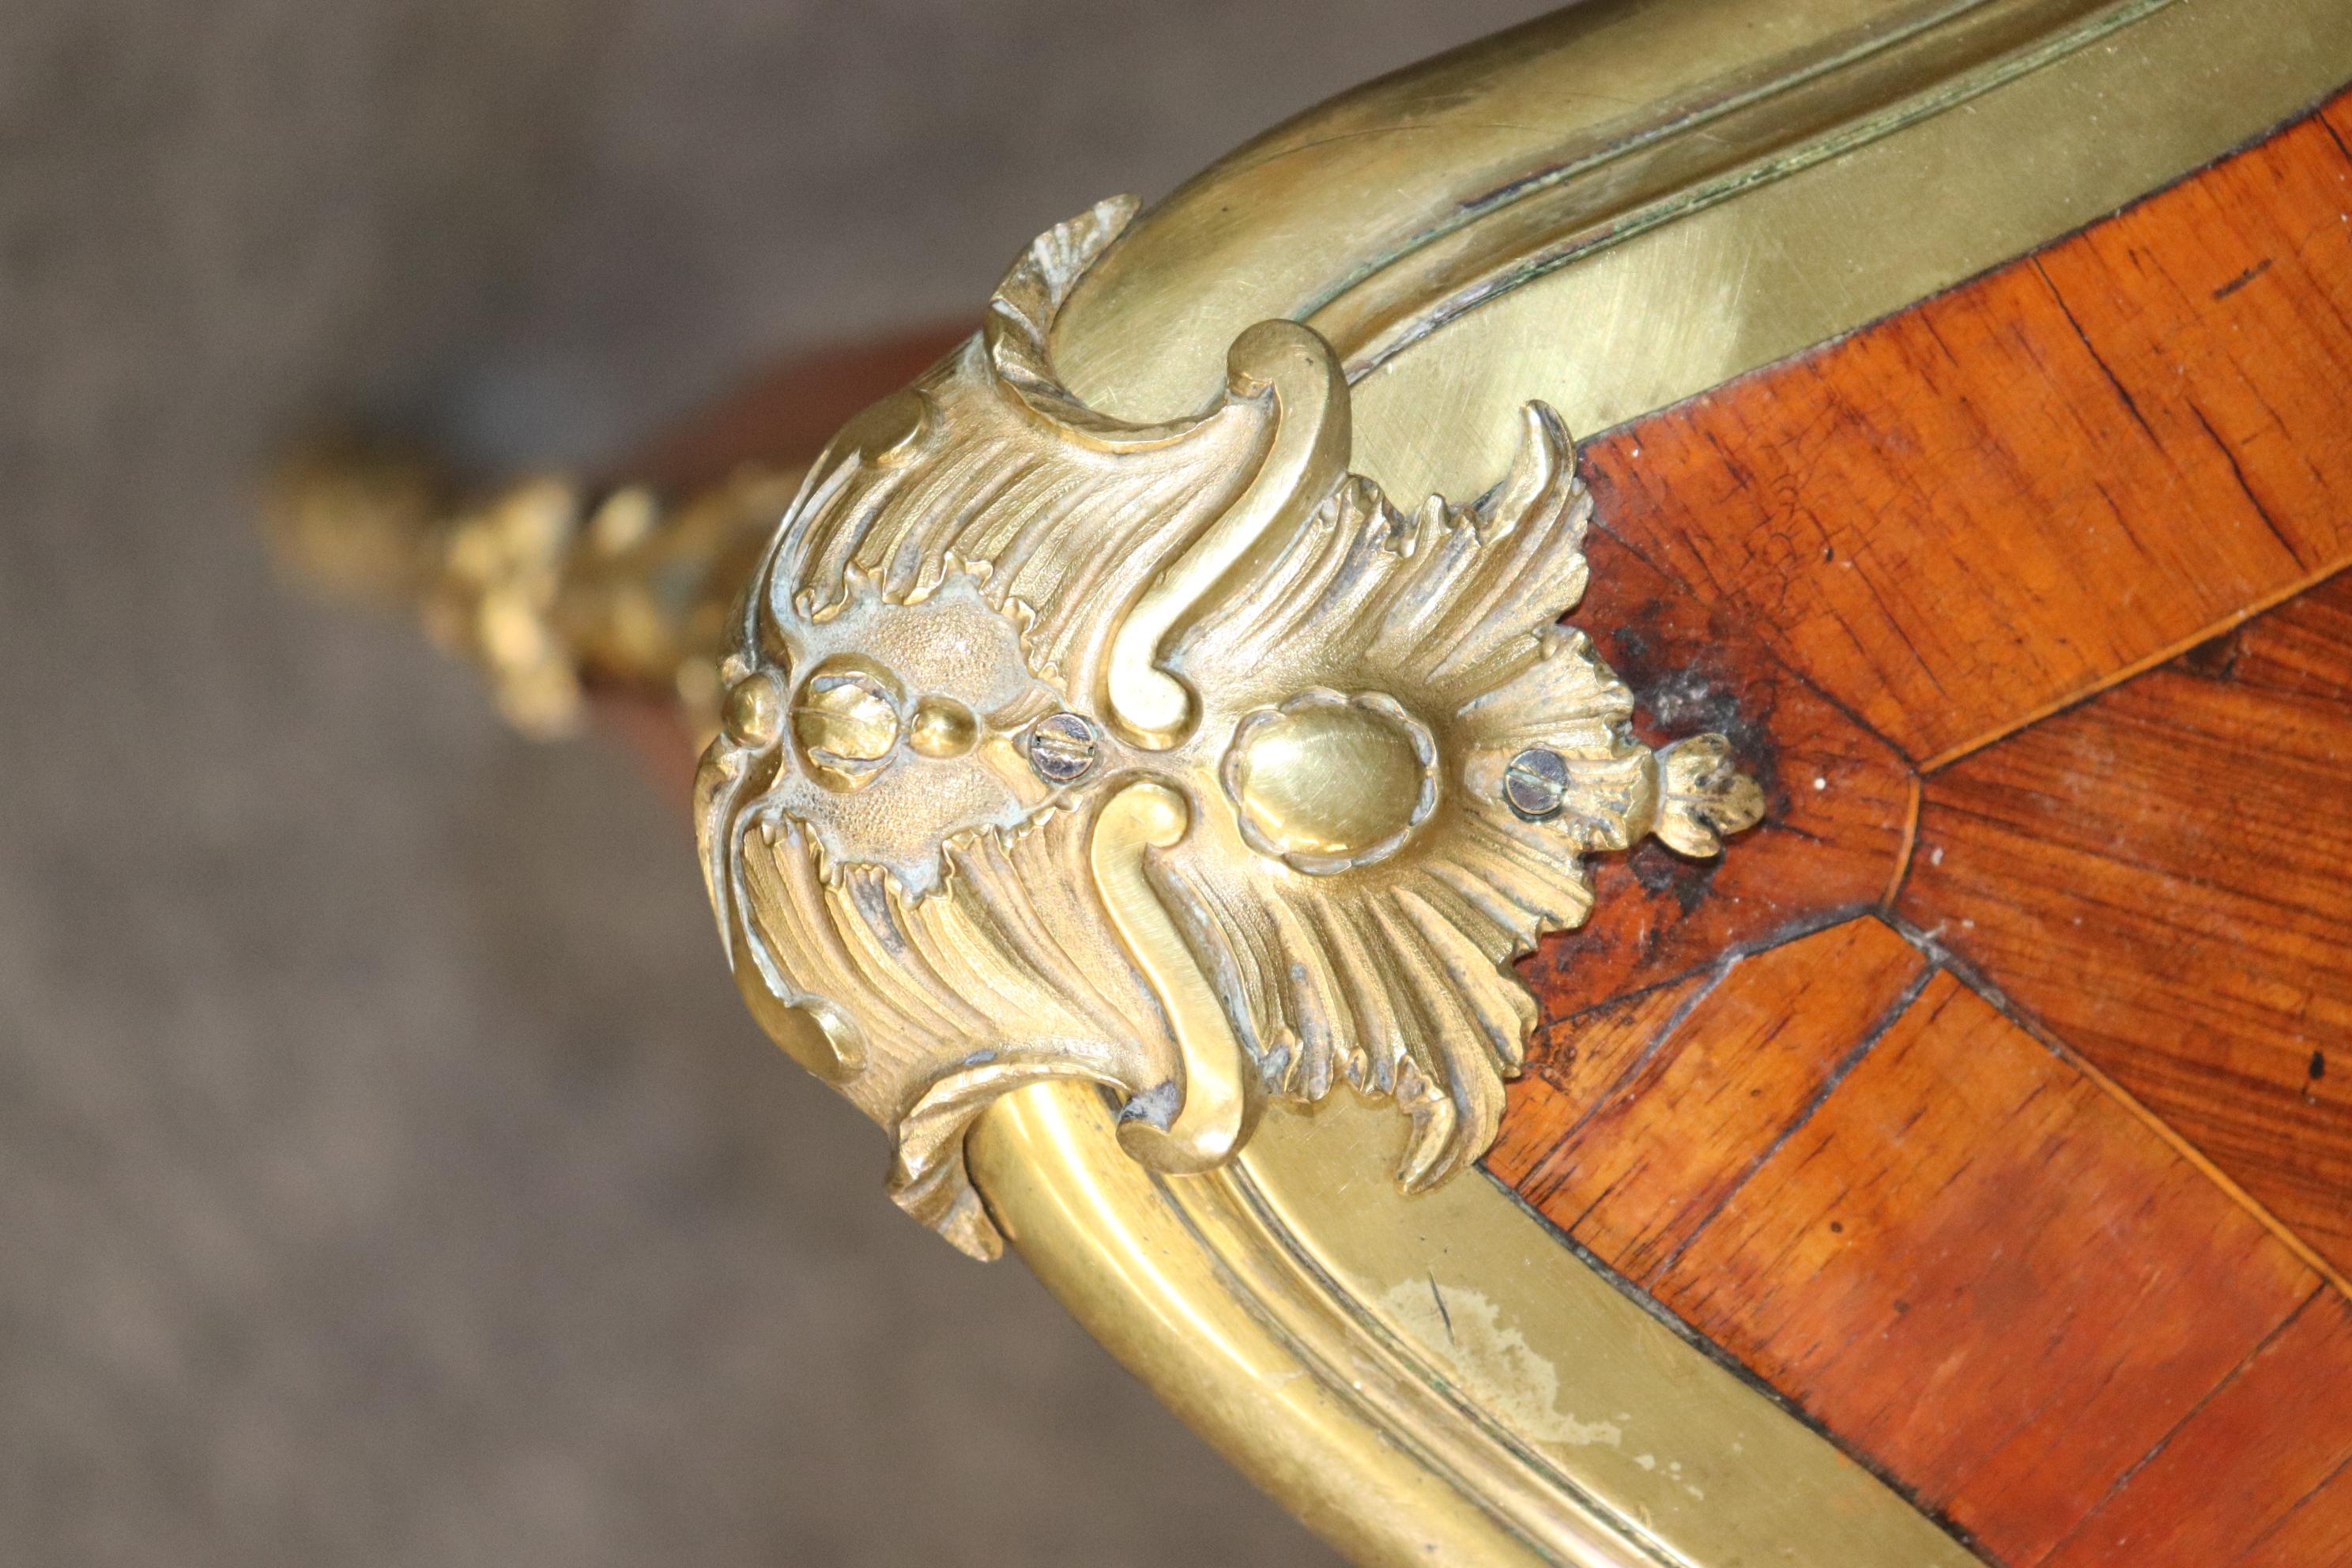 Late 19th Century Fine Quality Antique French Louis XV Bronze Mounted Bureau Plat Writing Desk